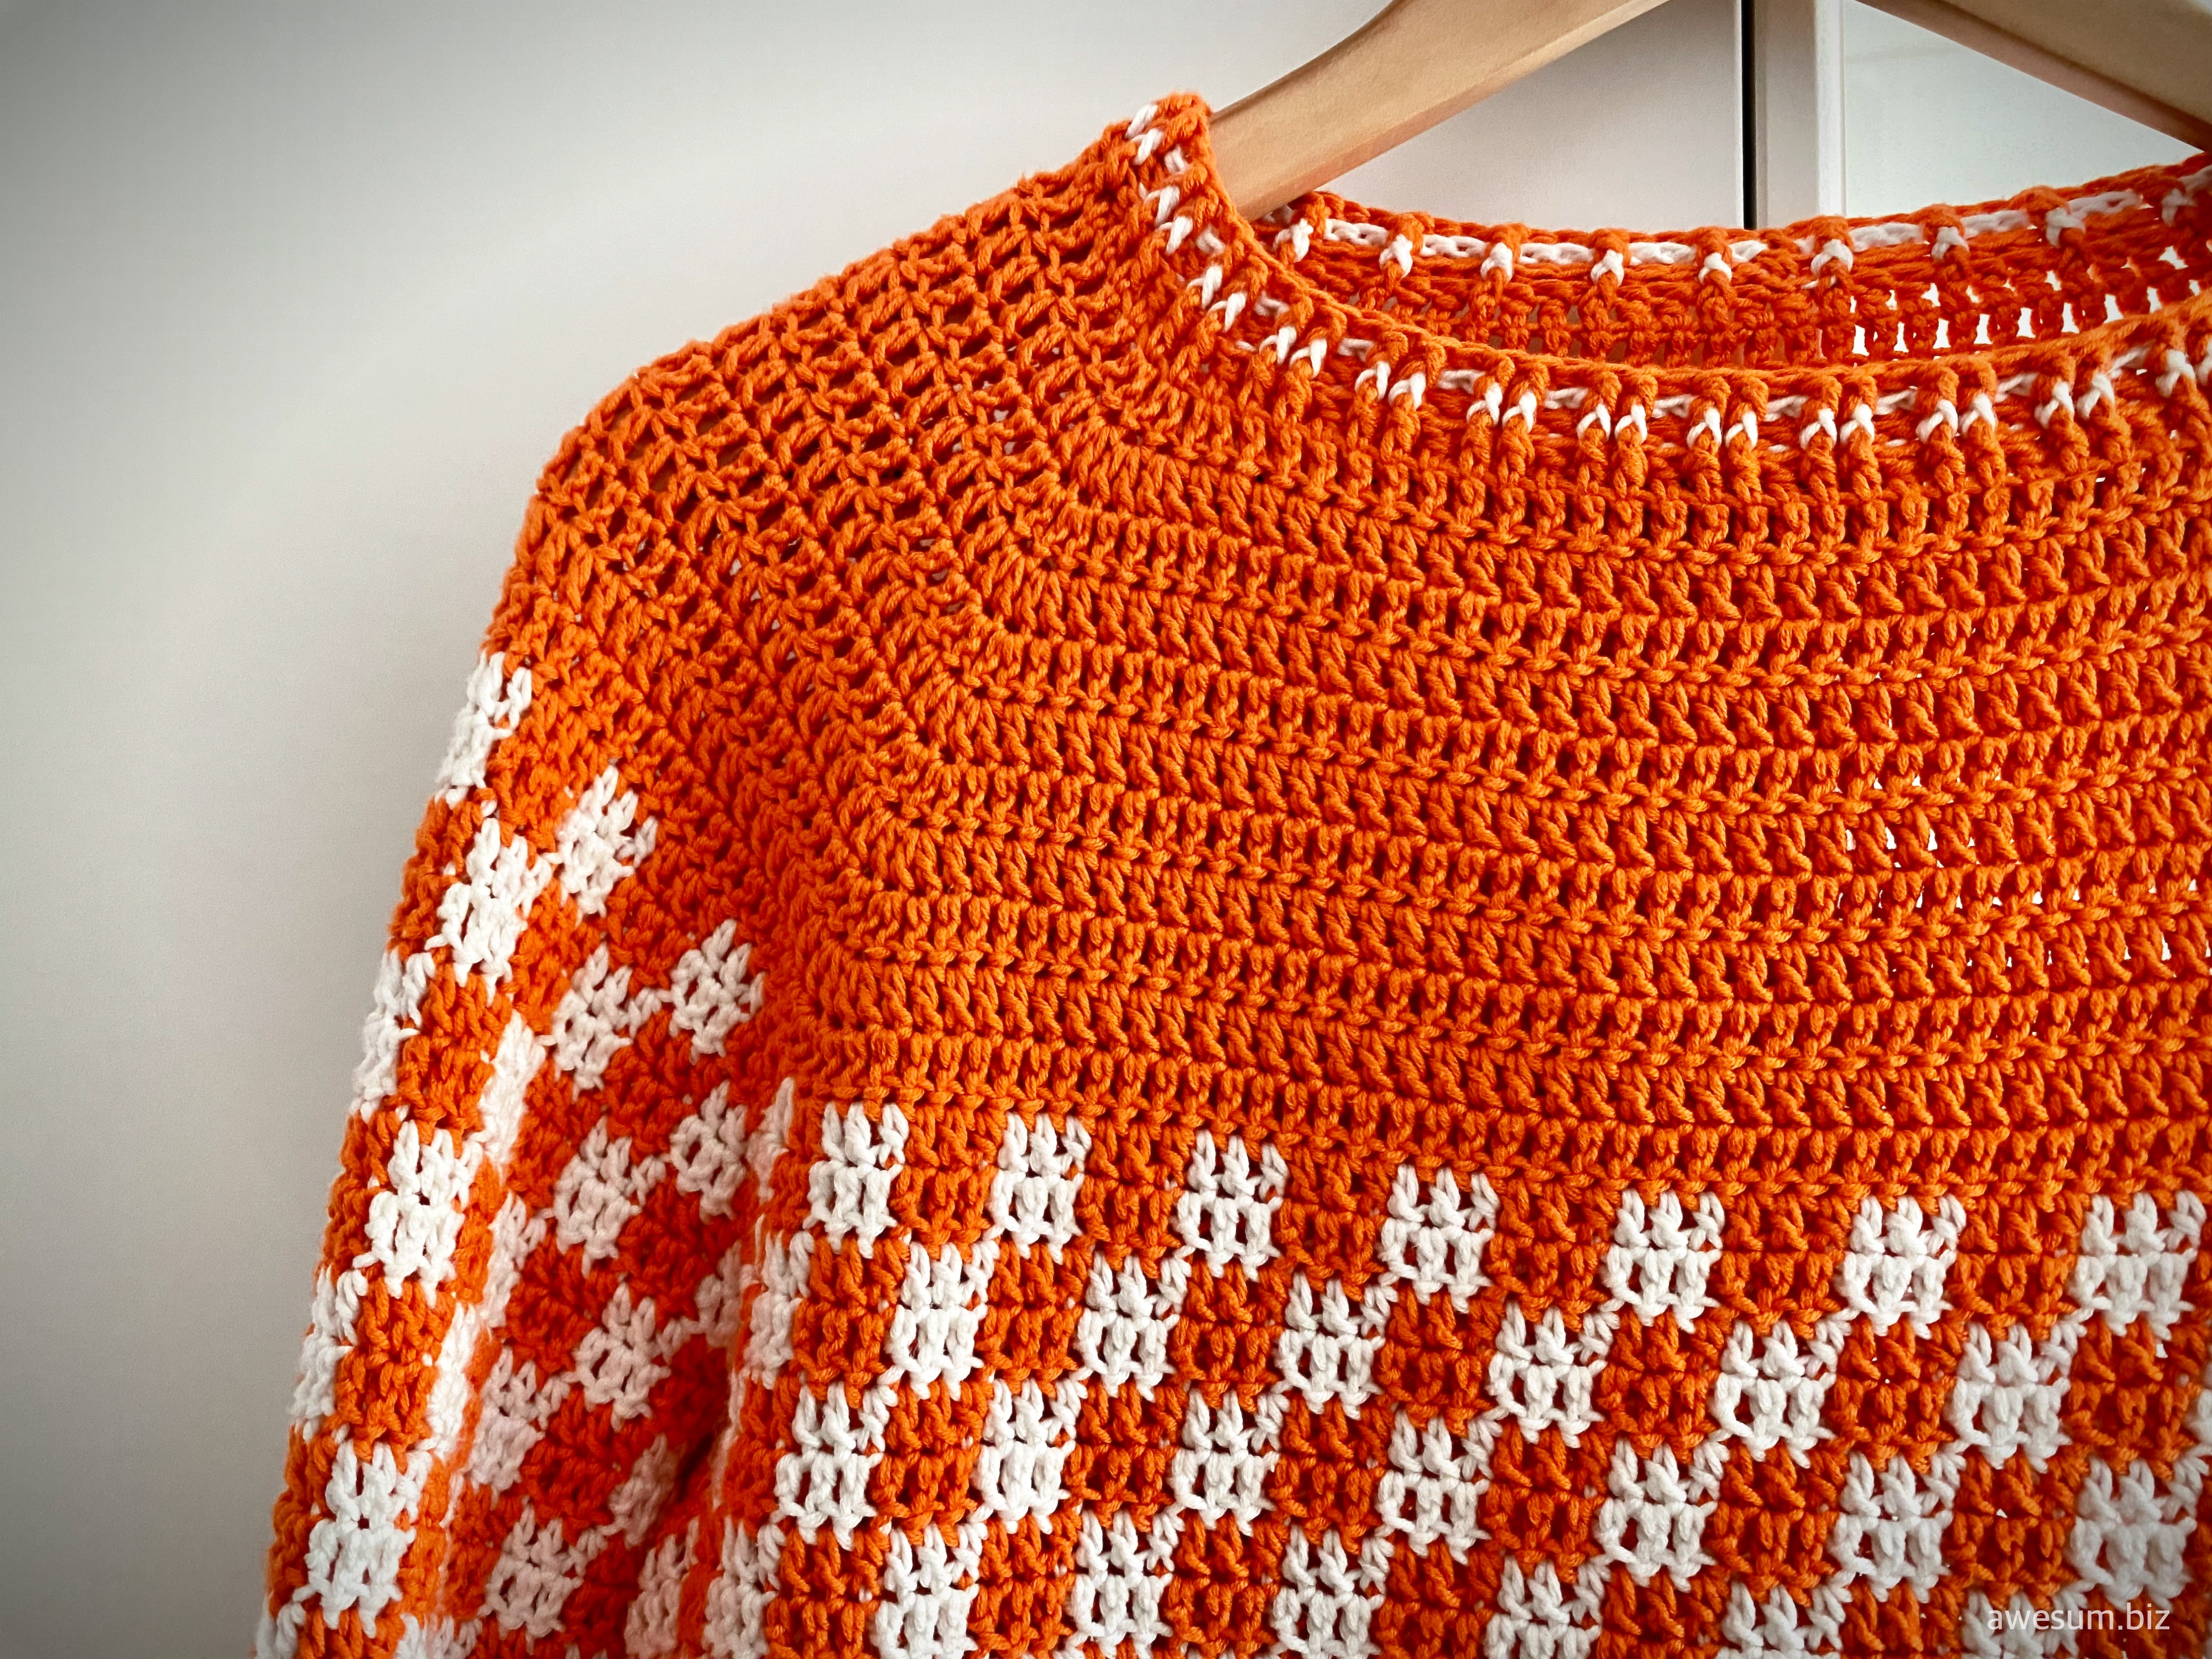 awesum crochet orange men's crochet jersey white checkered increases form Raglan sleeves